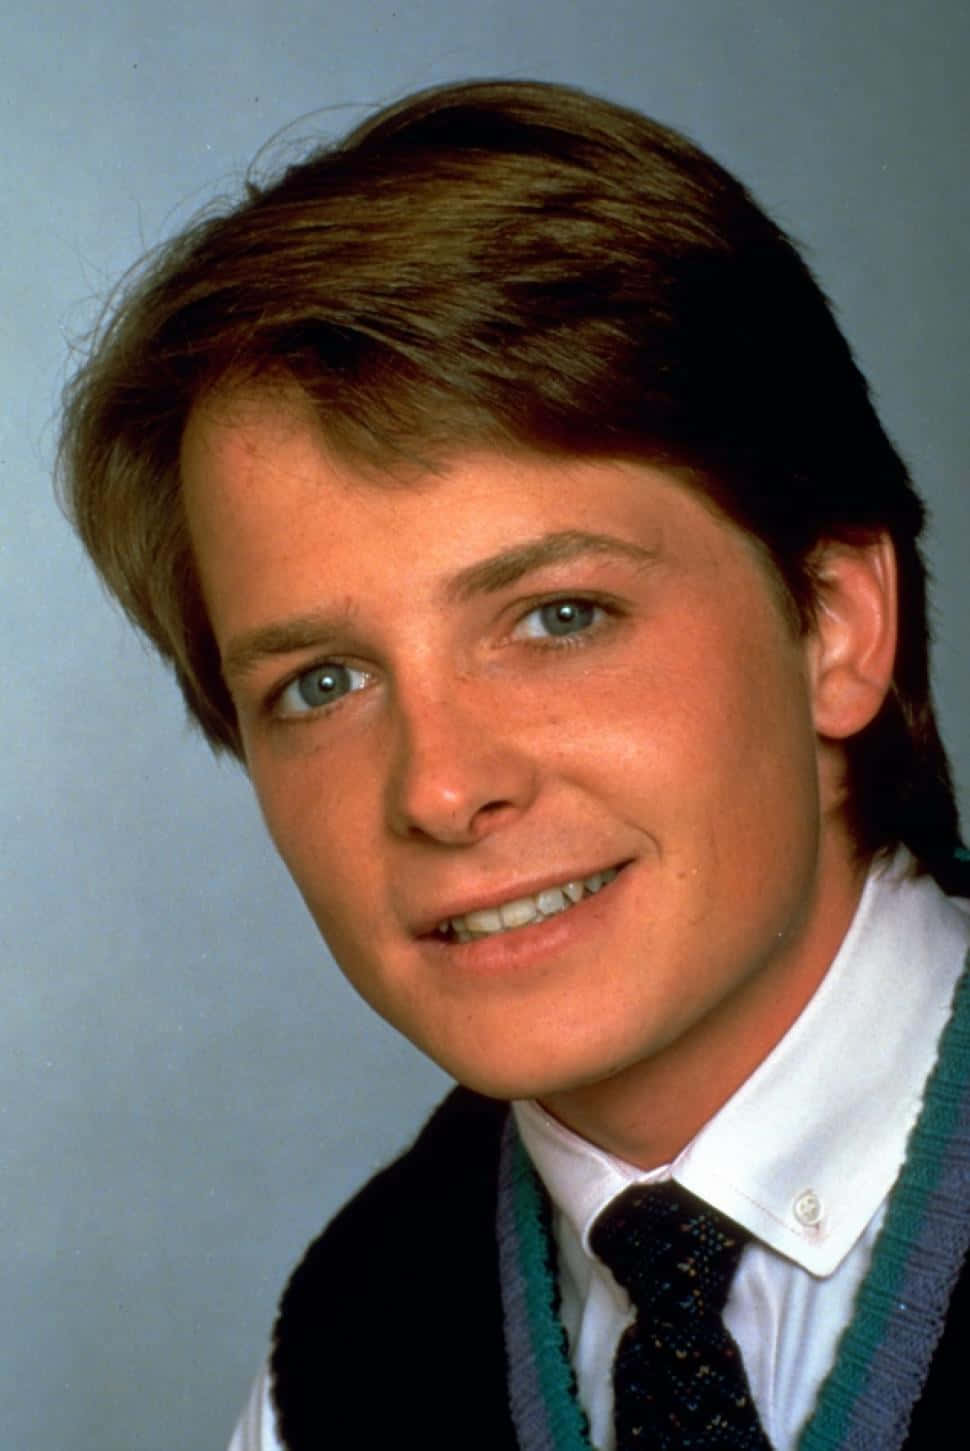 Michael J. Fox, Actor And Parkinson's Disease Advocate